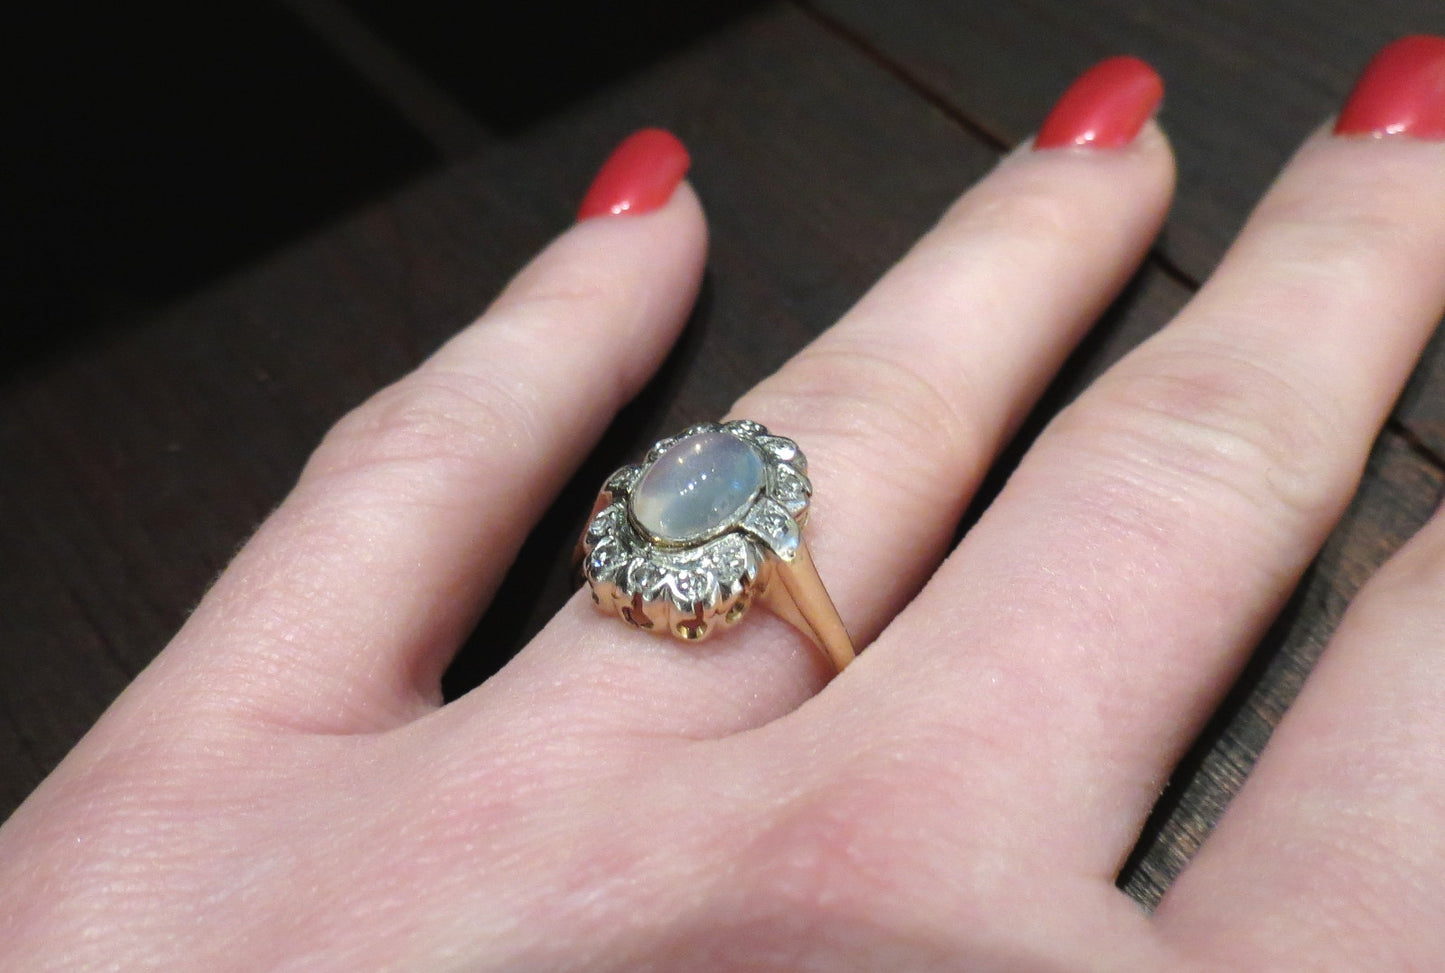 SOLD--Art Deco Moonstone and Diamond Ring 14k c. 1930